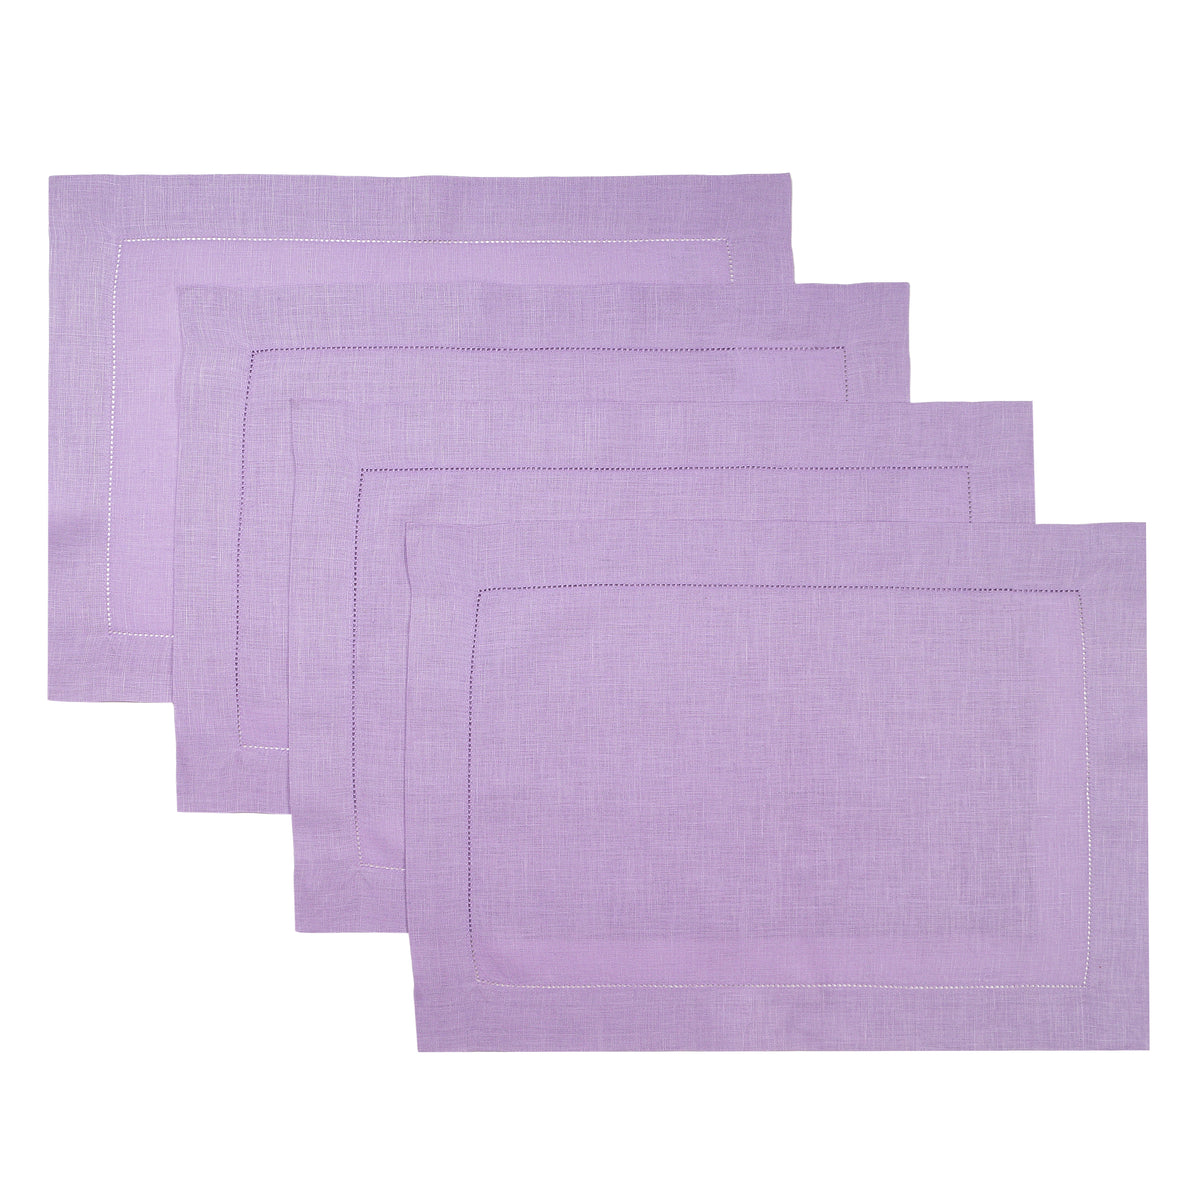 Lavender Linen Placemats 14 x 19 Inch Set of 4 - Hemstitch